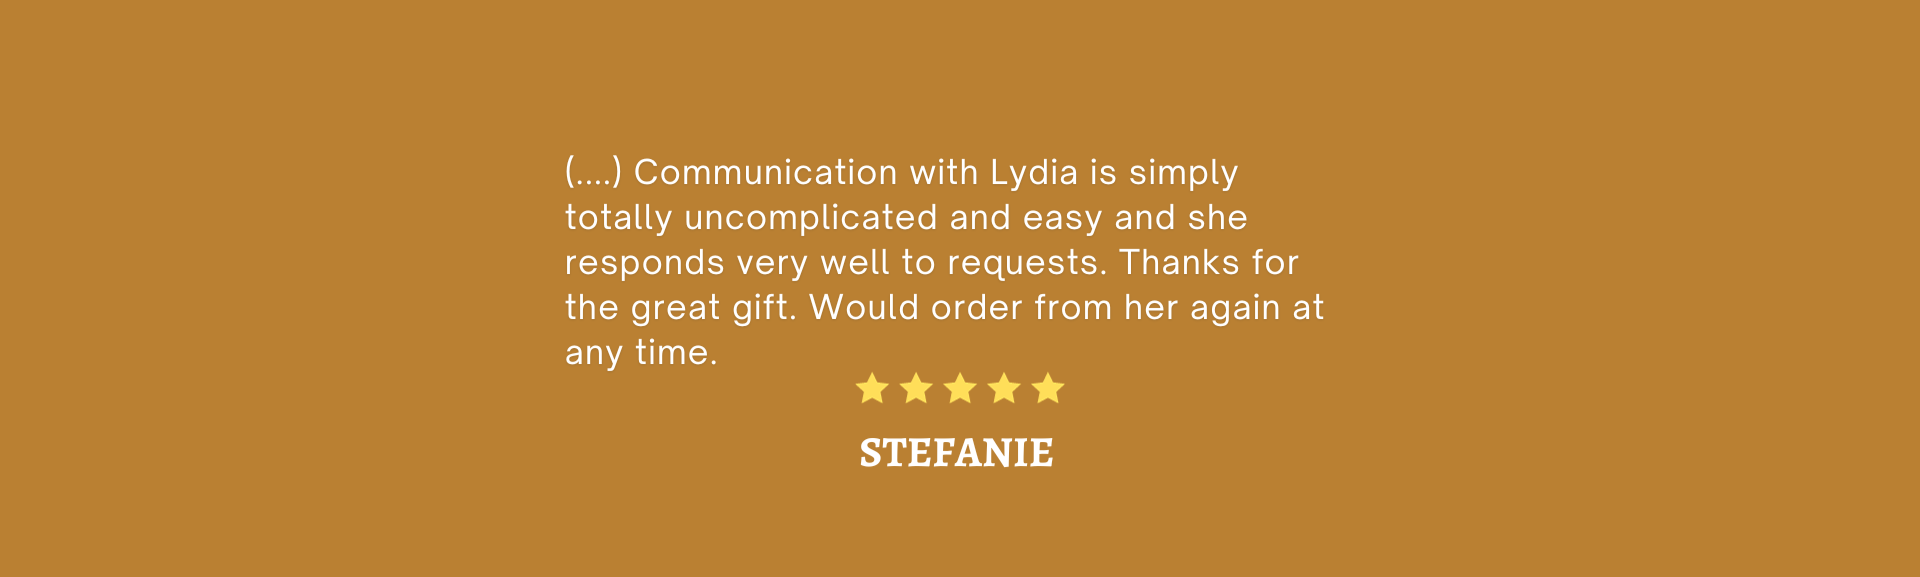 Review Stefanie